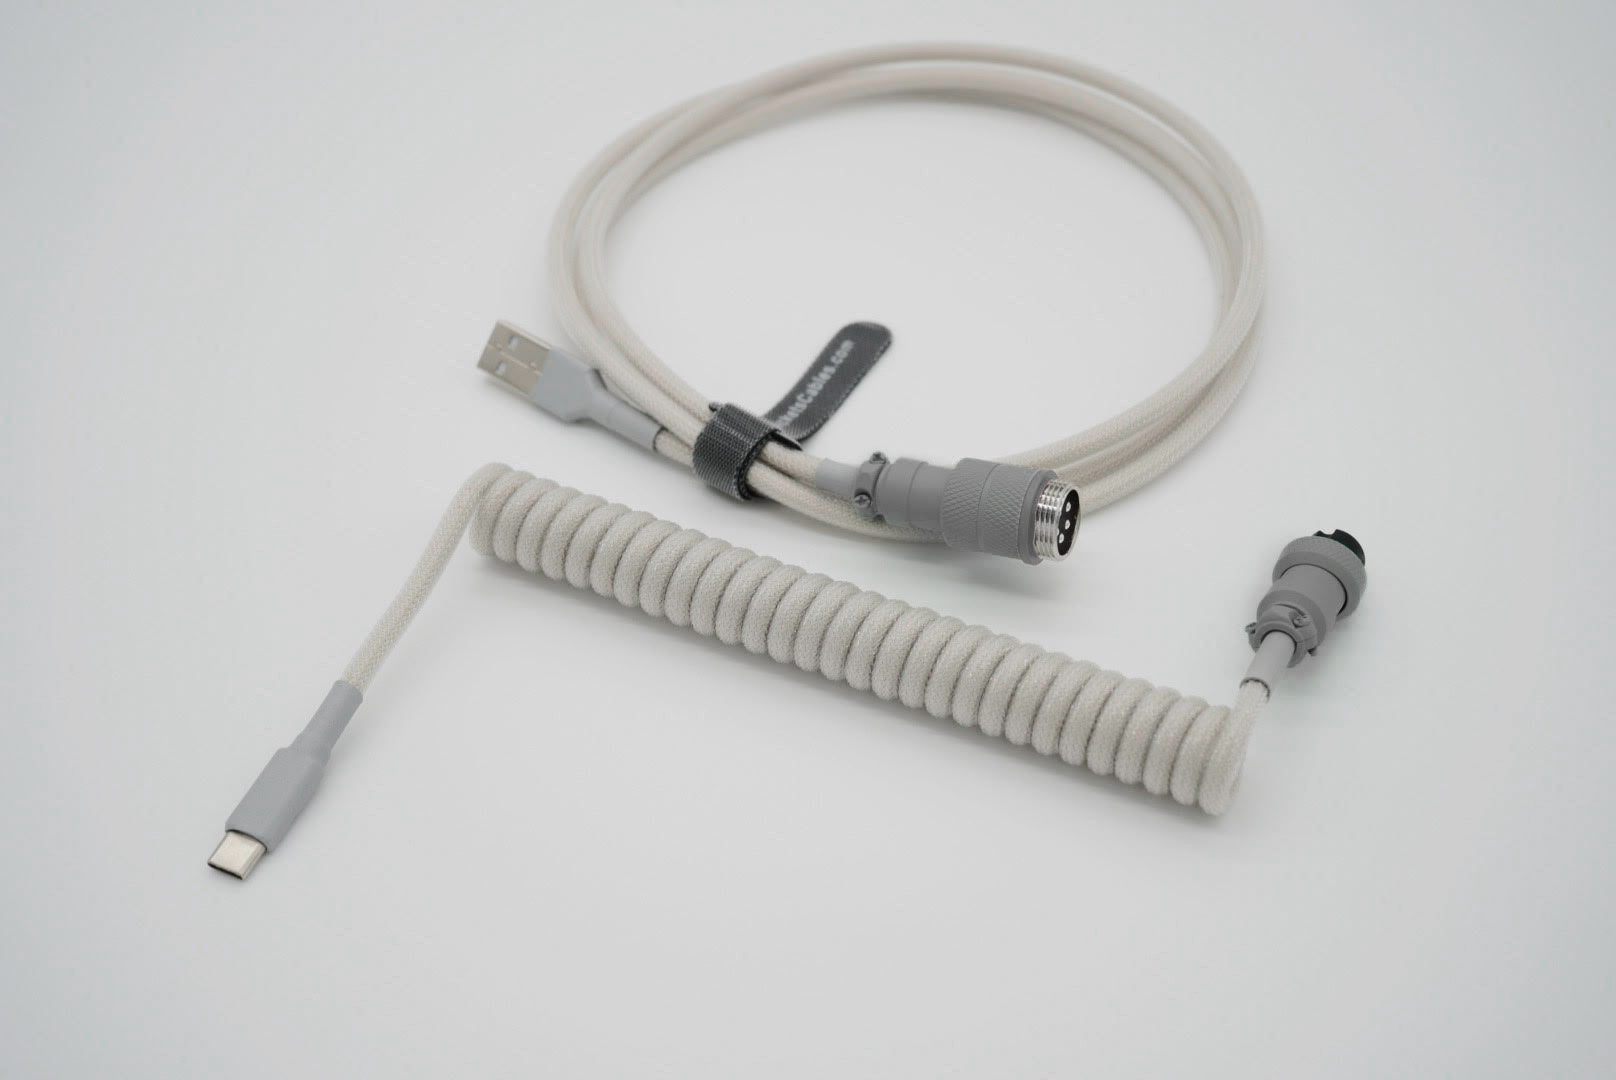 [GB] ePBT Simple Hangul Cable